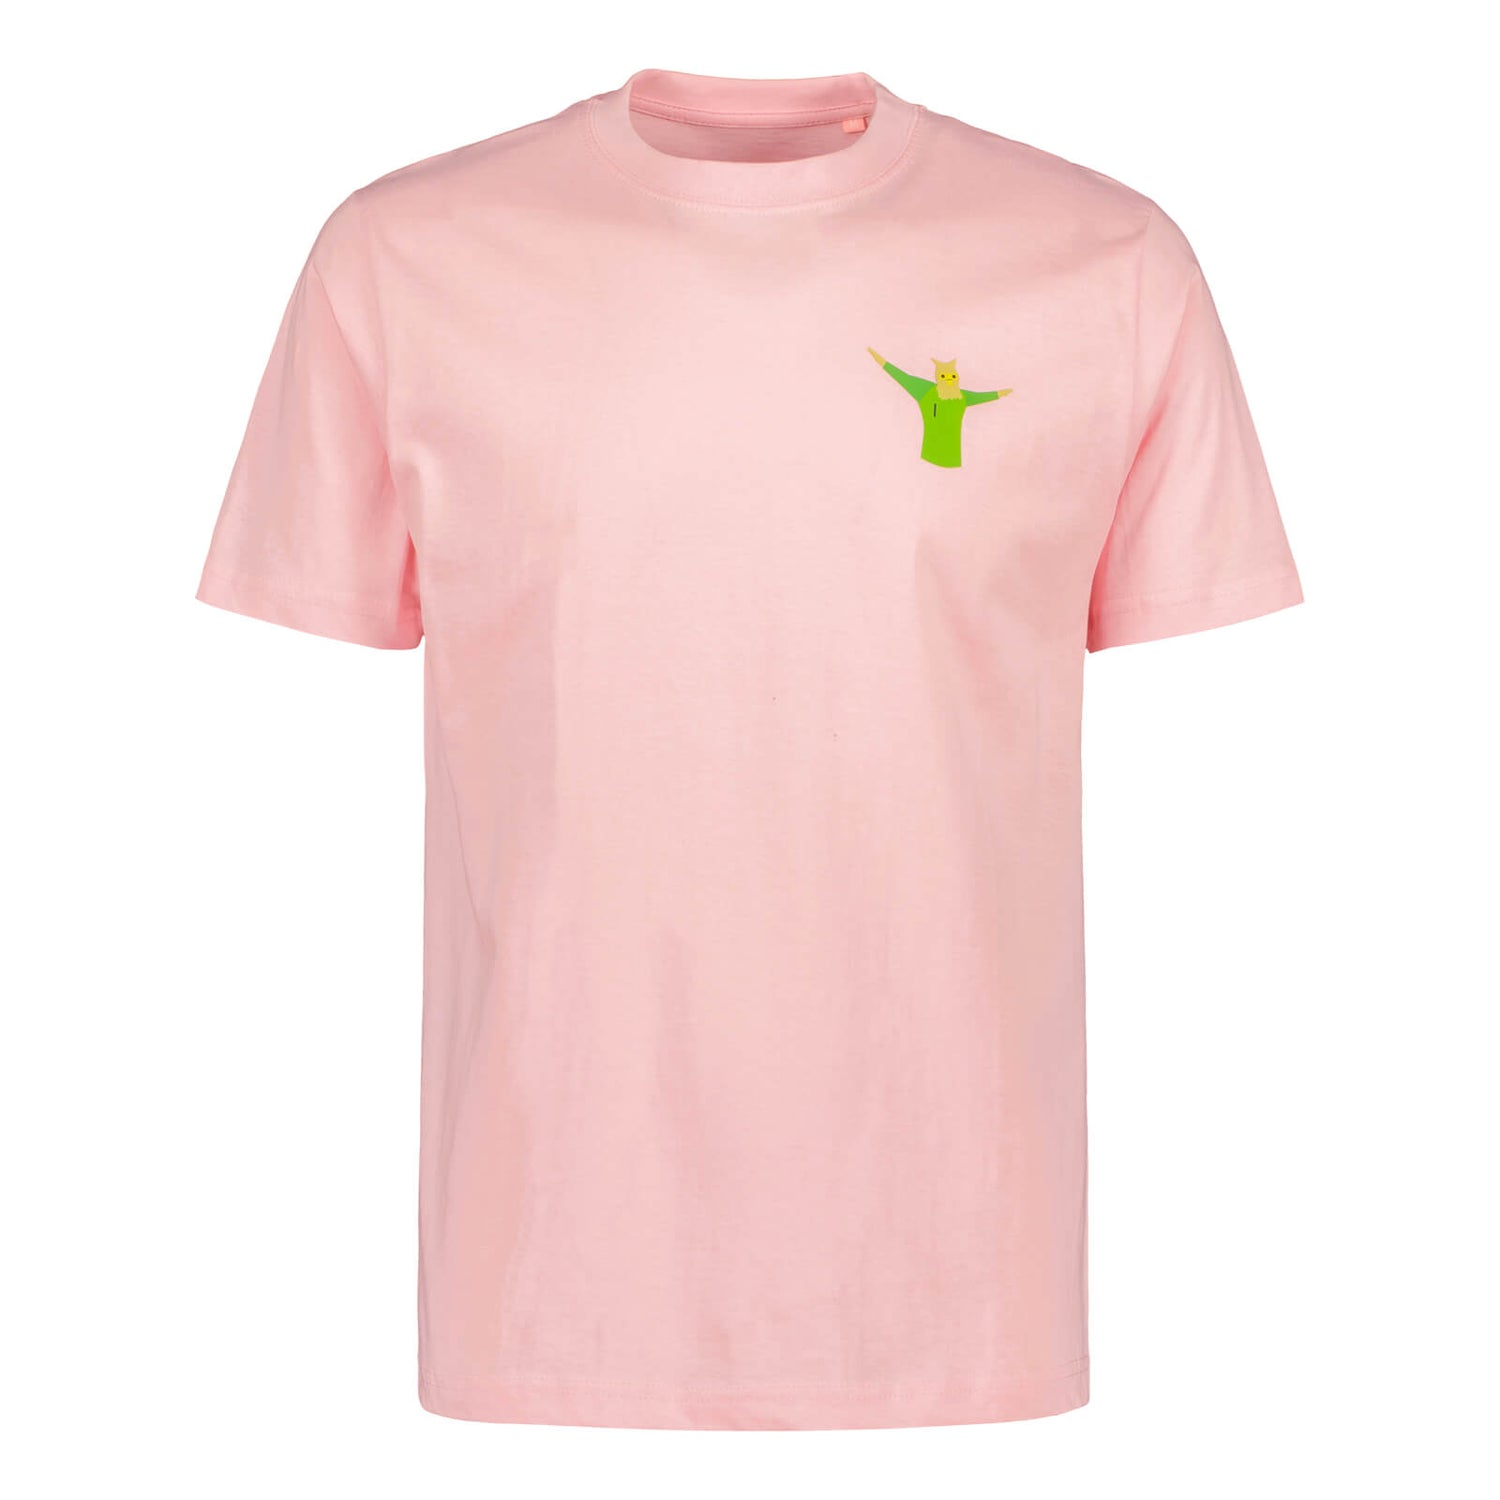 HUU Luke t-shirt, Pink